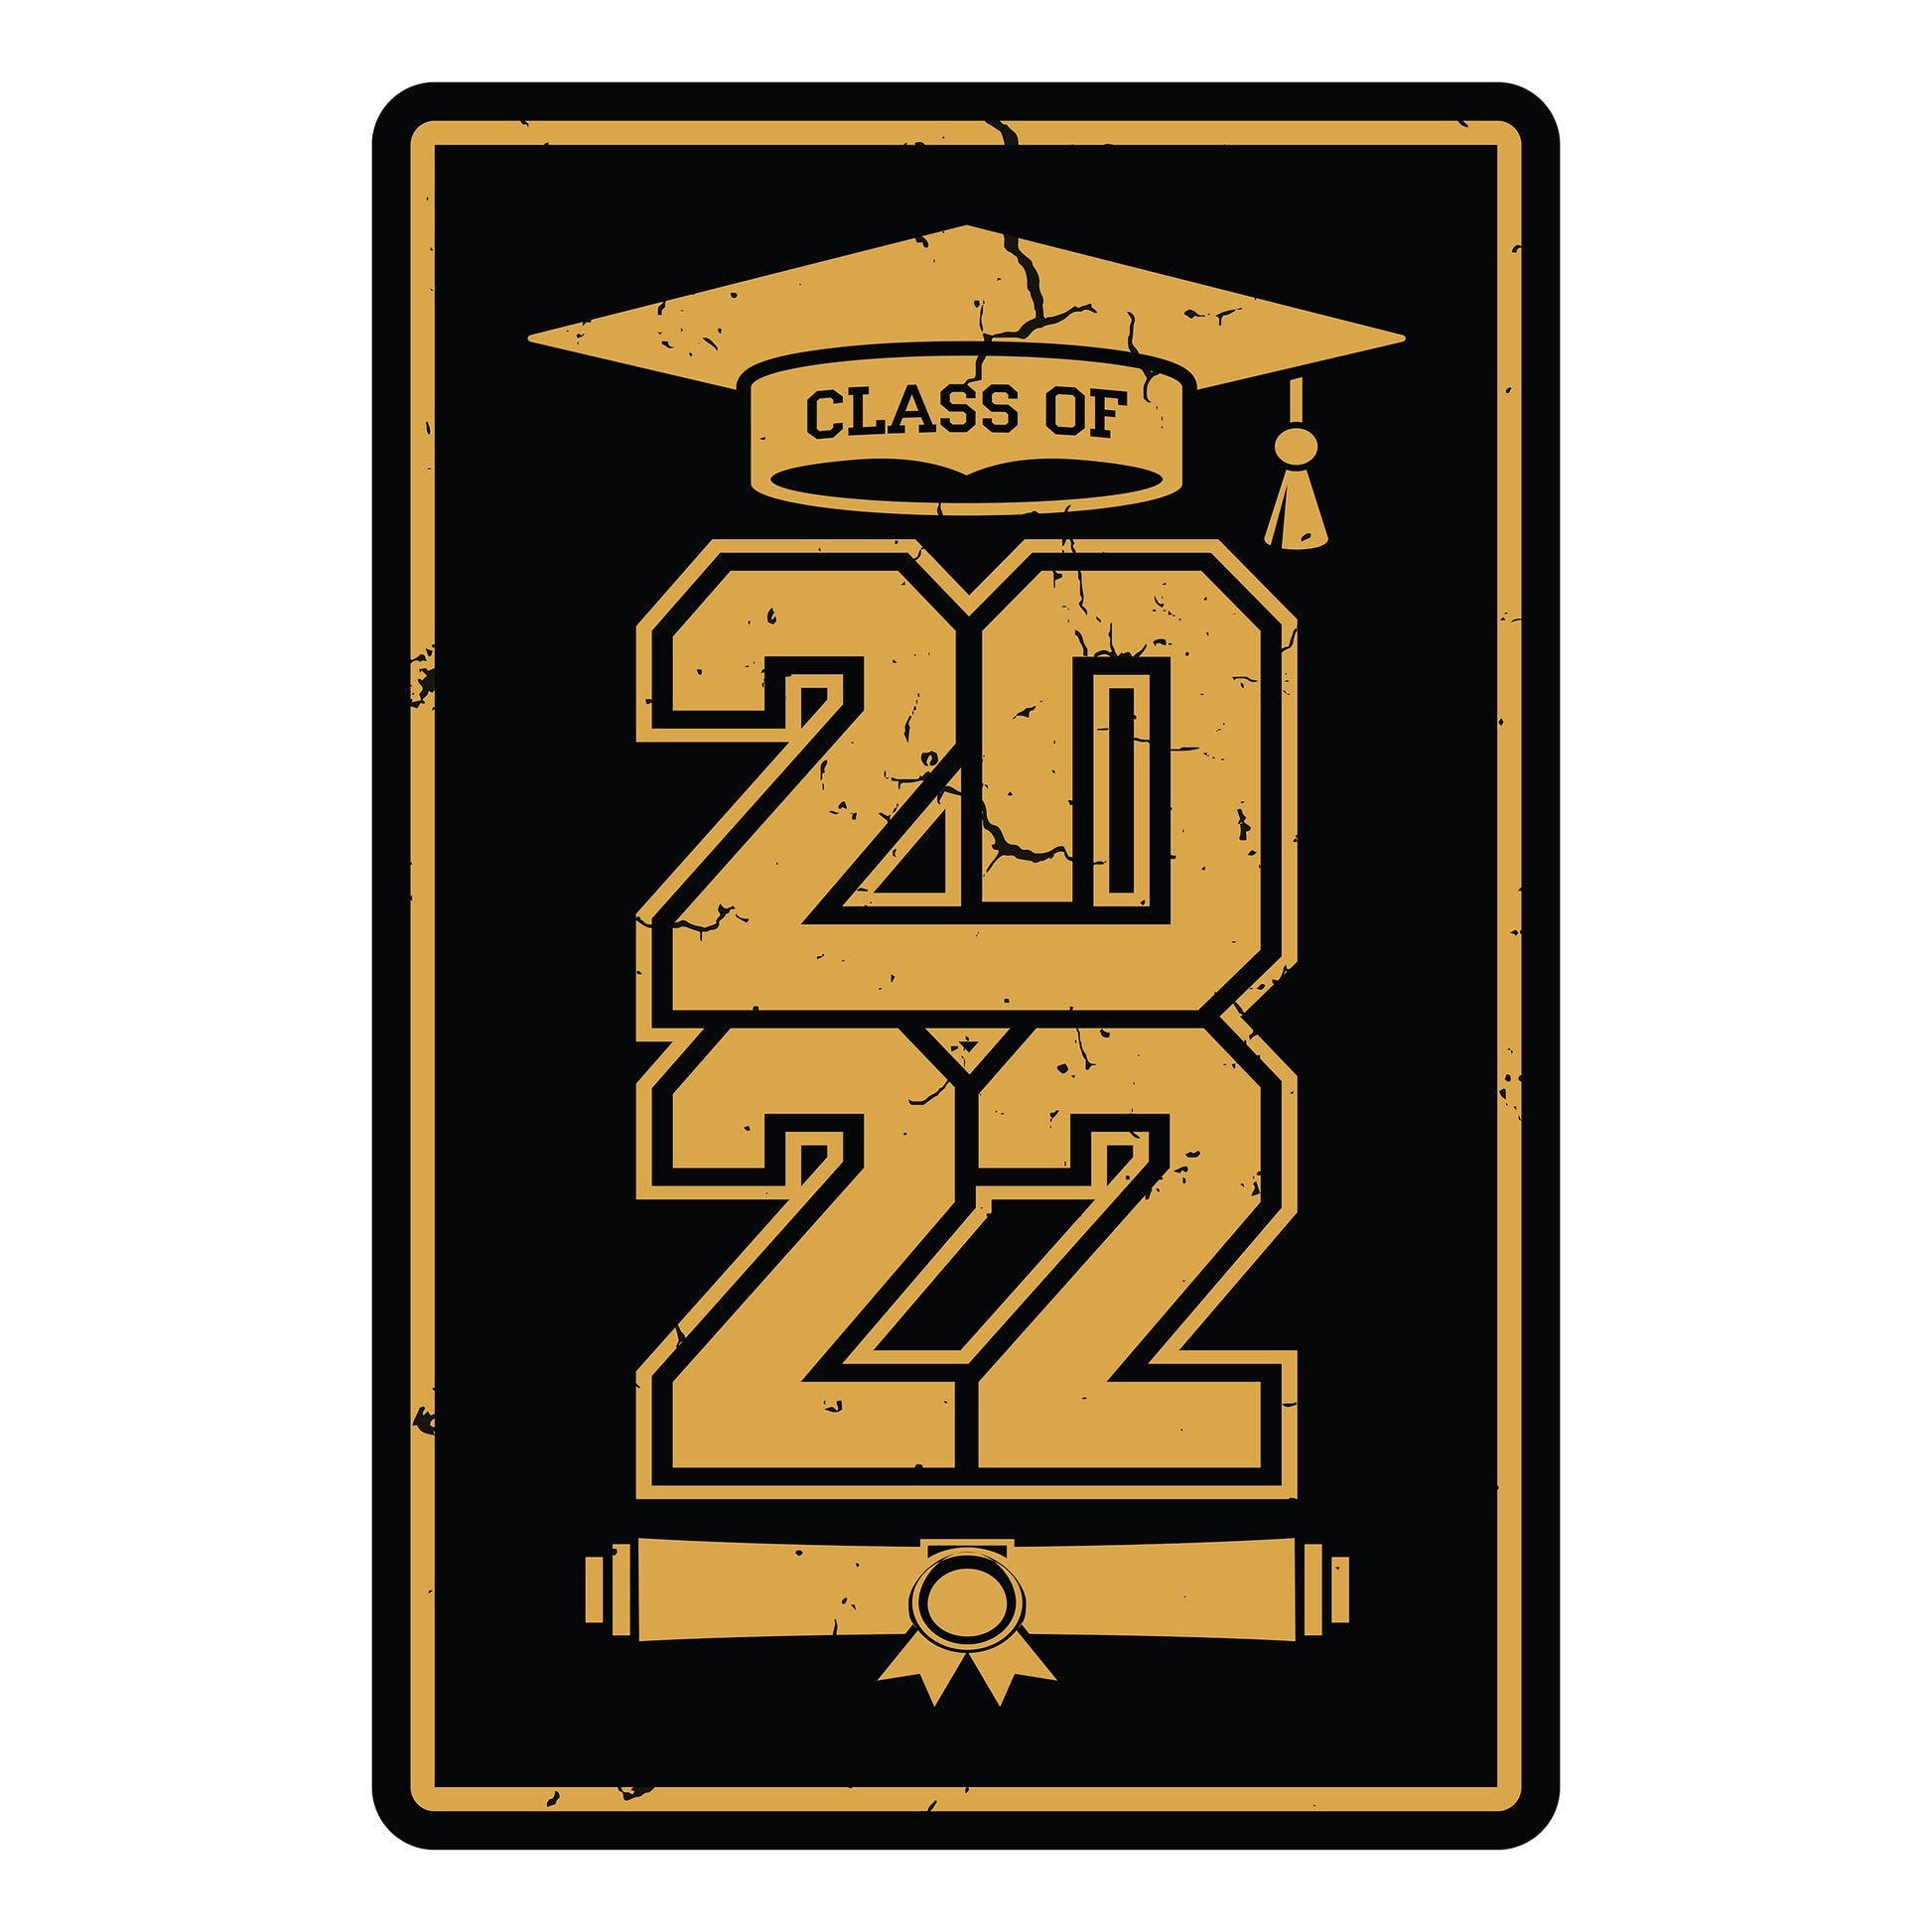 class of 2022 graduation background